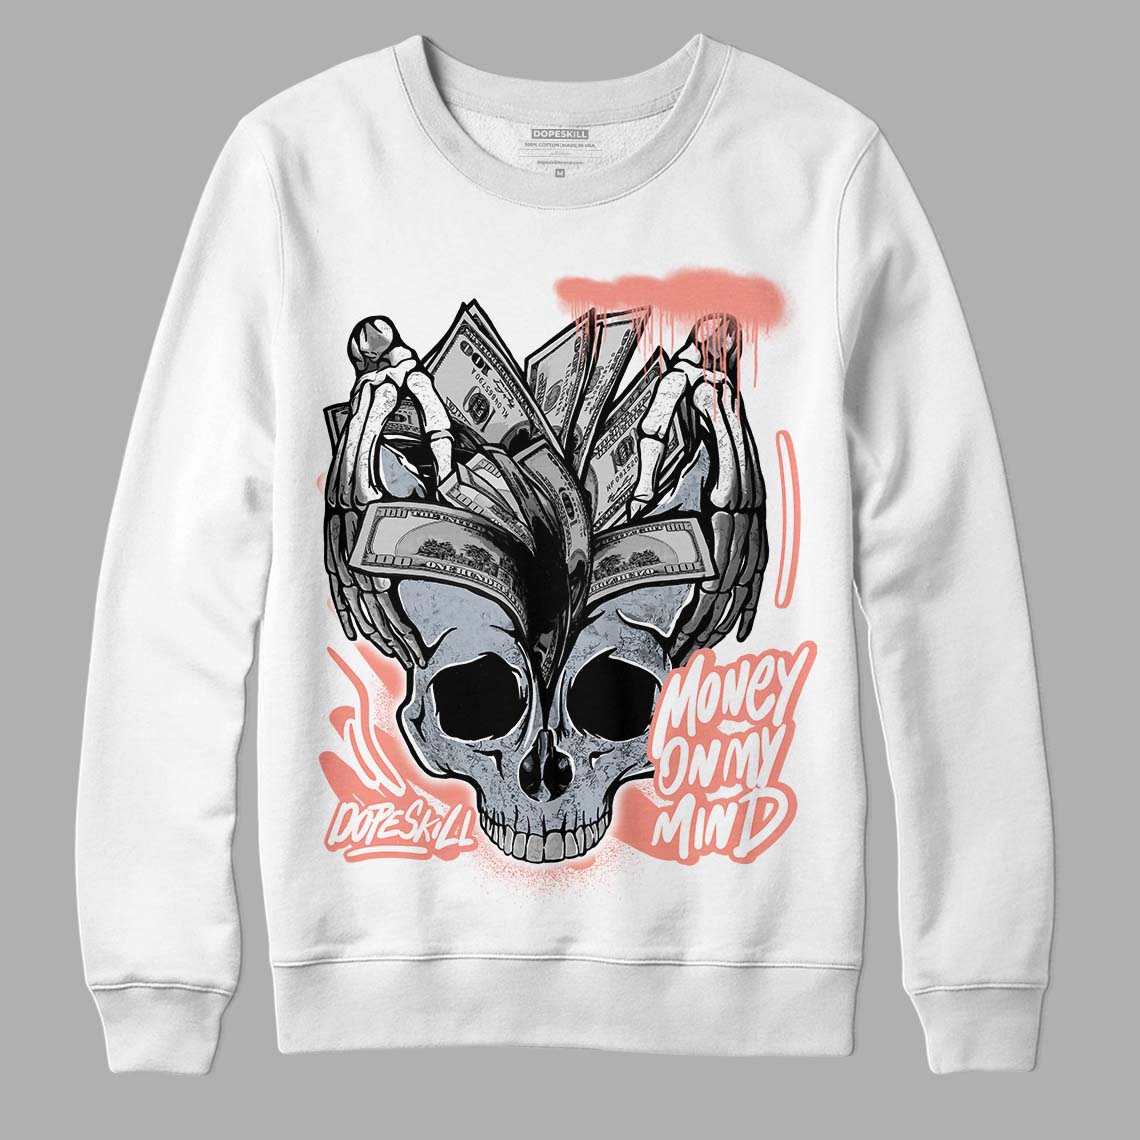 DJ Khaled x Jordan 5 Retro ‘Crimson Bliss’ DopeSkill Sweatshirt MOMM Skull Graphic Streetwear - White 